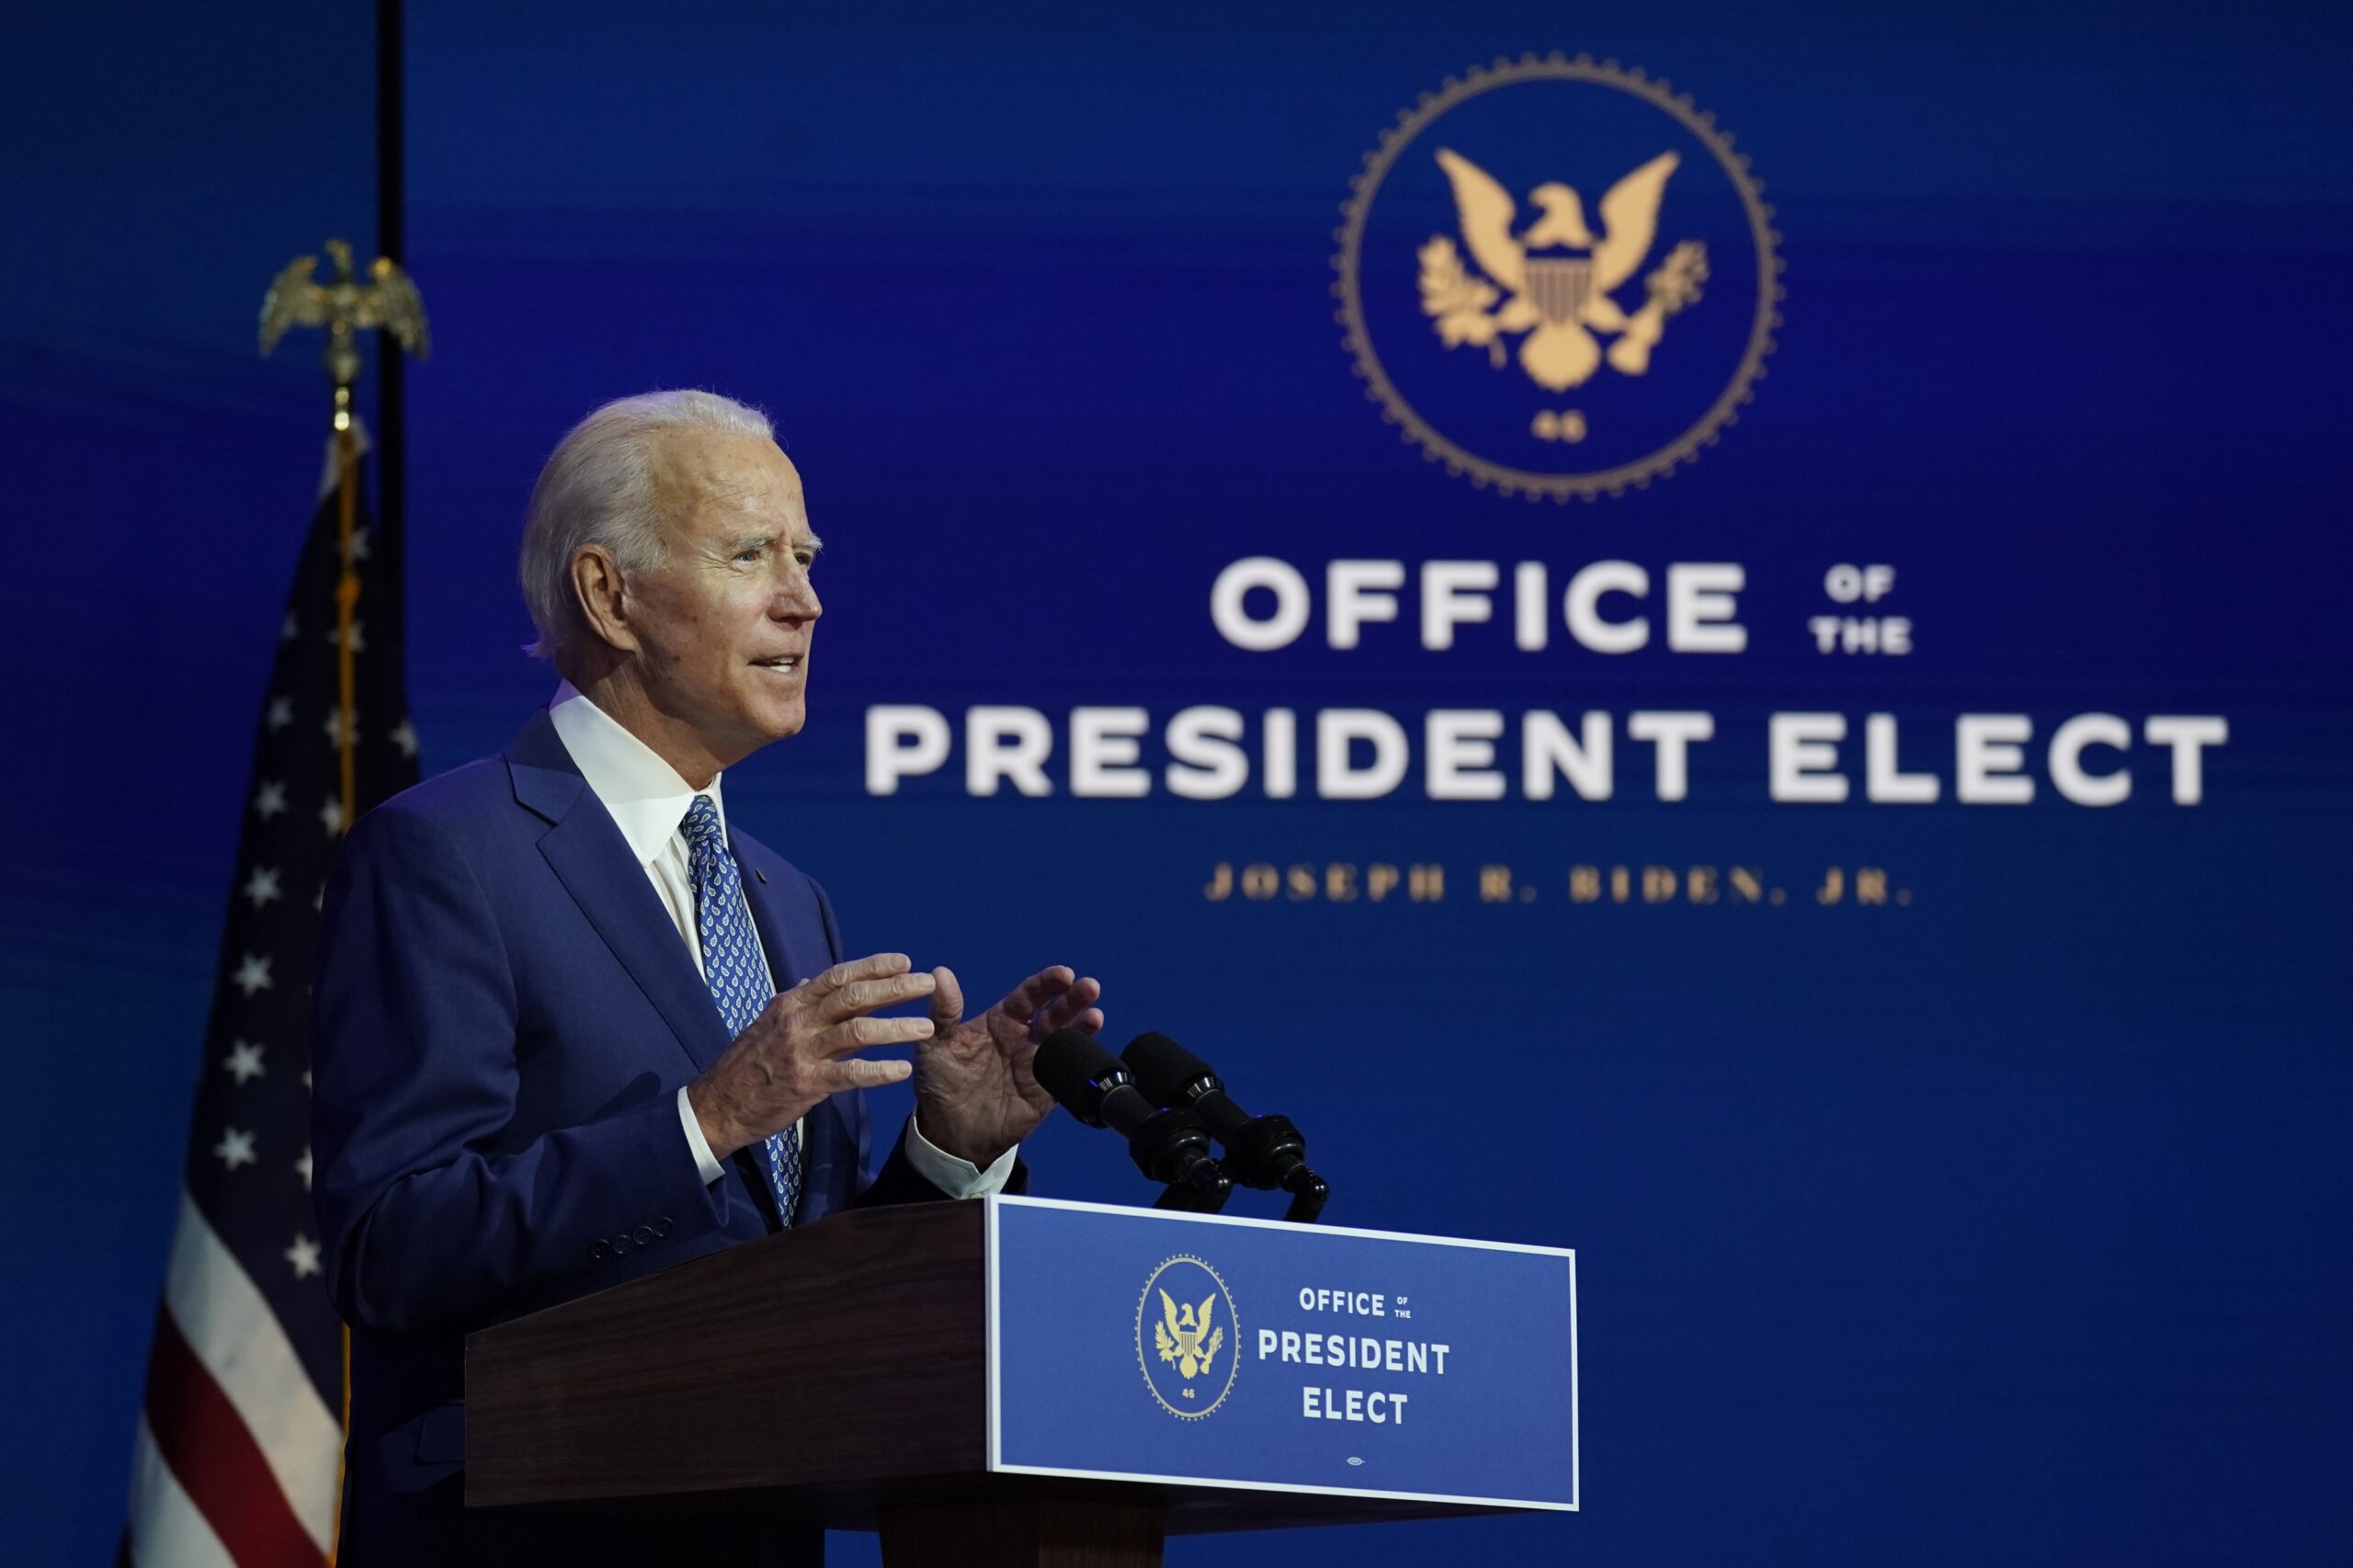 President-elect Joe Biden speaks at a podium